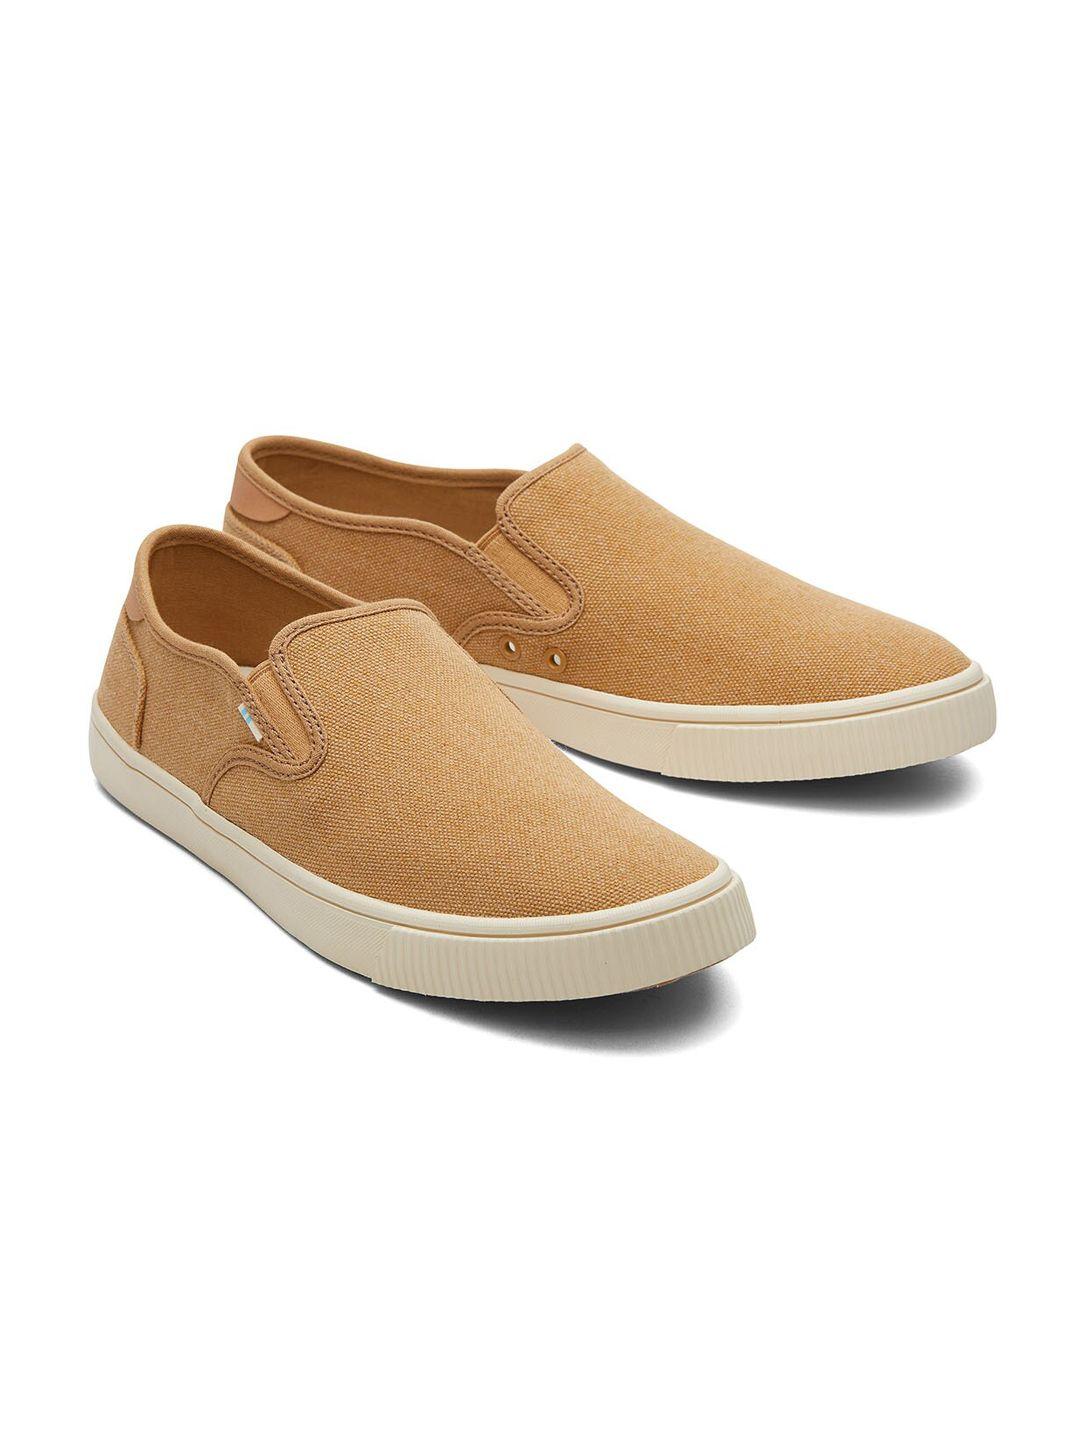 toms-men-brown-woven-design-slip-on-sneakers